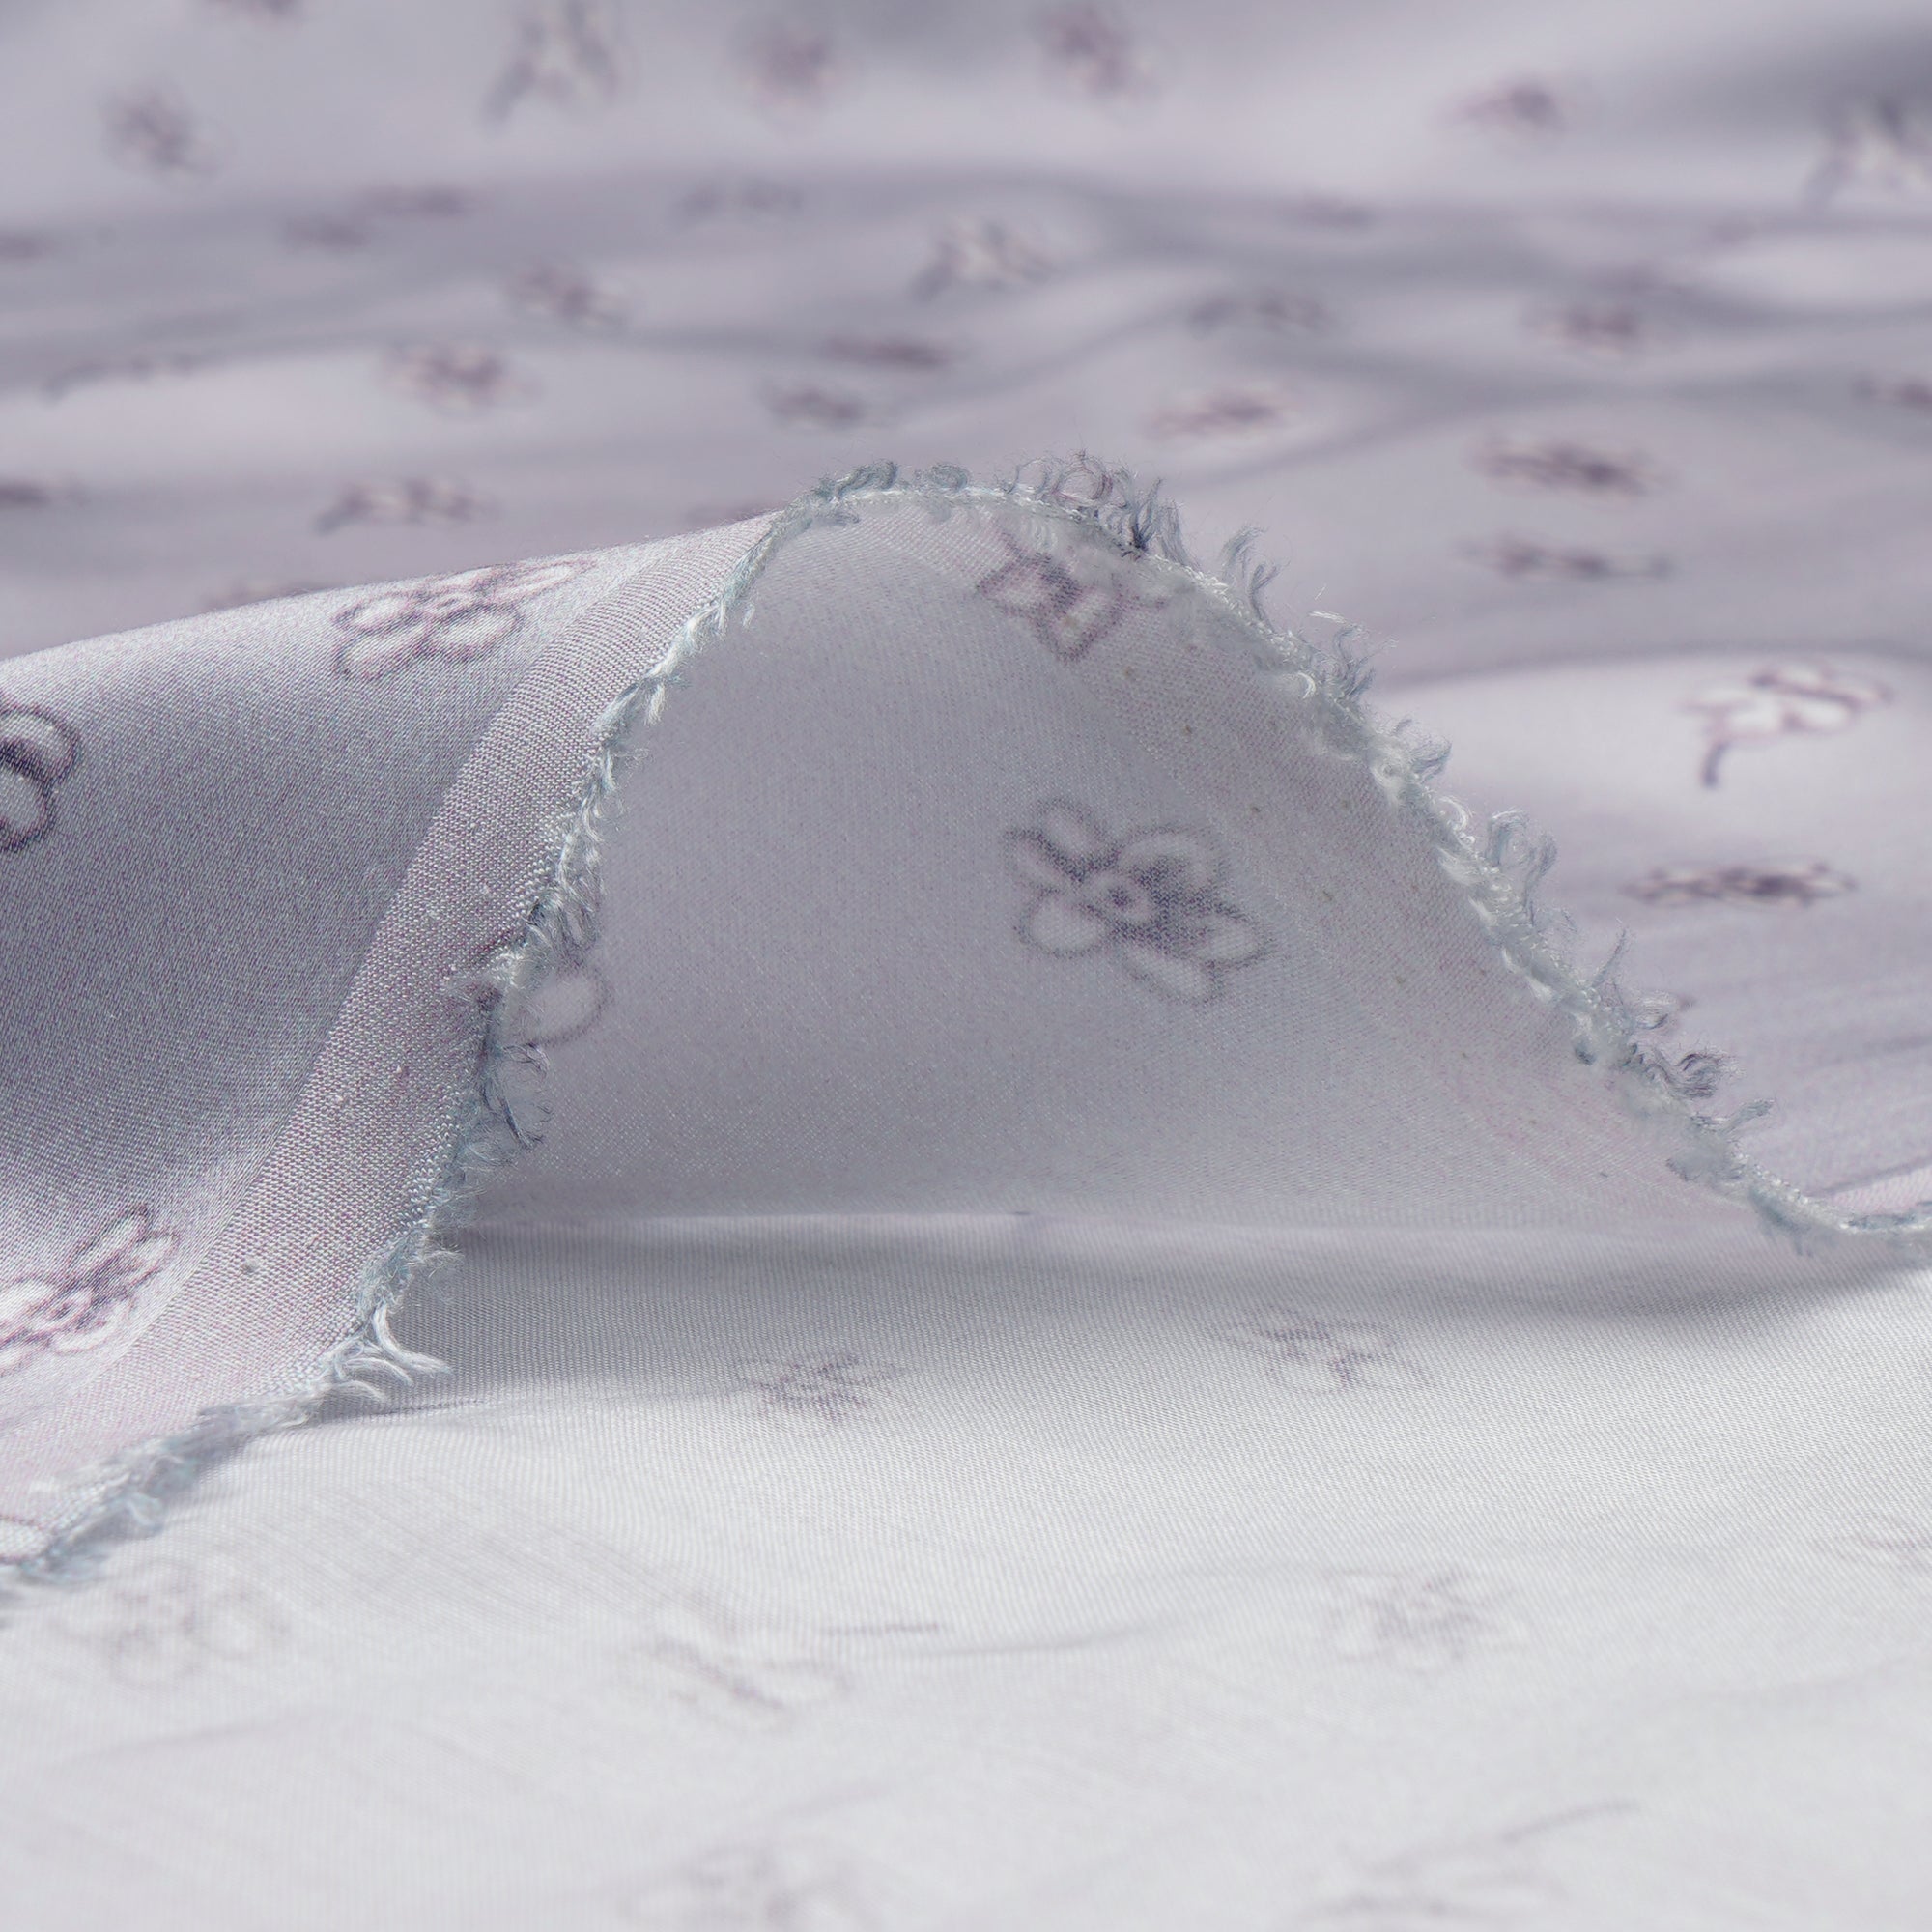 Light Lilac Color Digital Printed Modal Satin Fabric